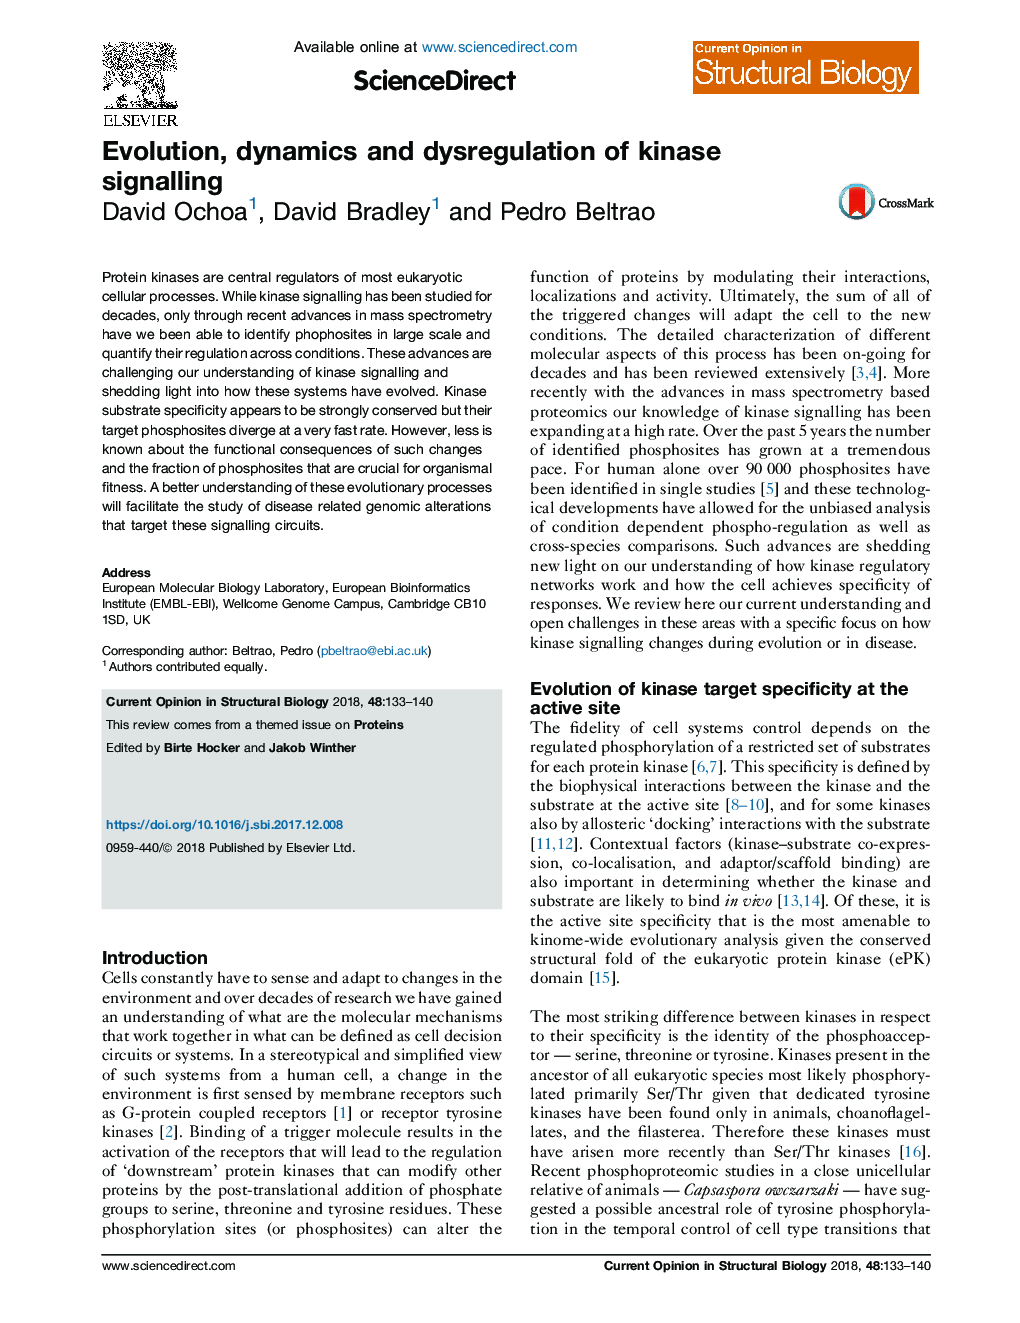 Evolution, dynamics and dysregulation of kinase signalling